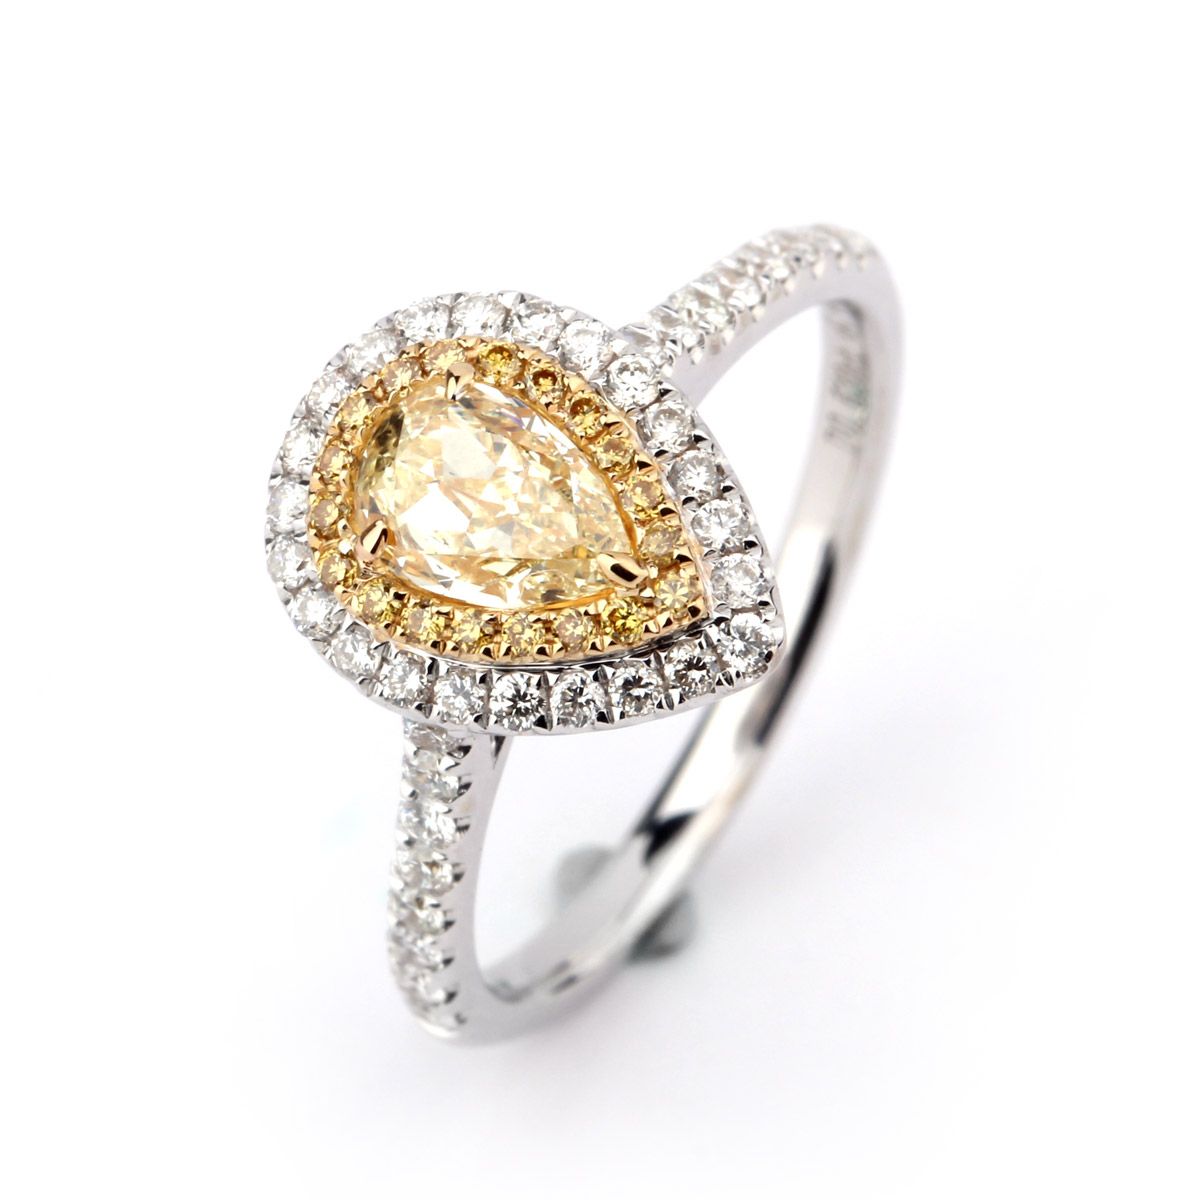 Fancy Intense Orangy Yellow Diamond Ring, 0.72 Ct. (1.15 Ct. TW), Pear shape, IGL Certified, D78386661IL